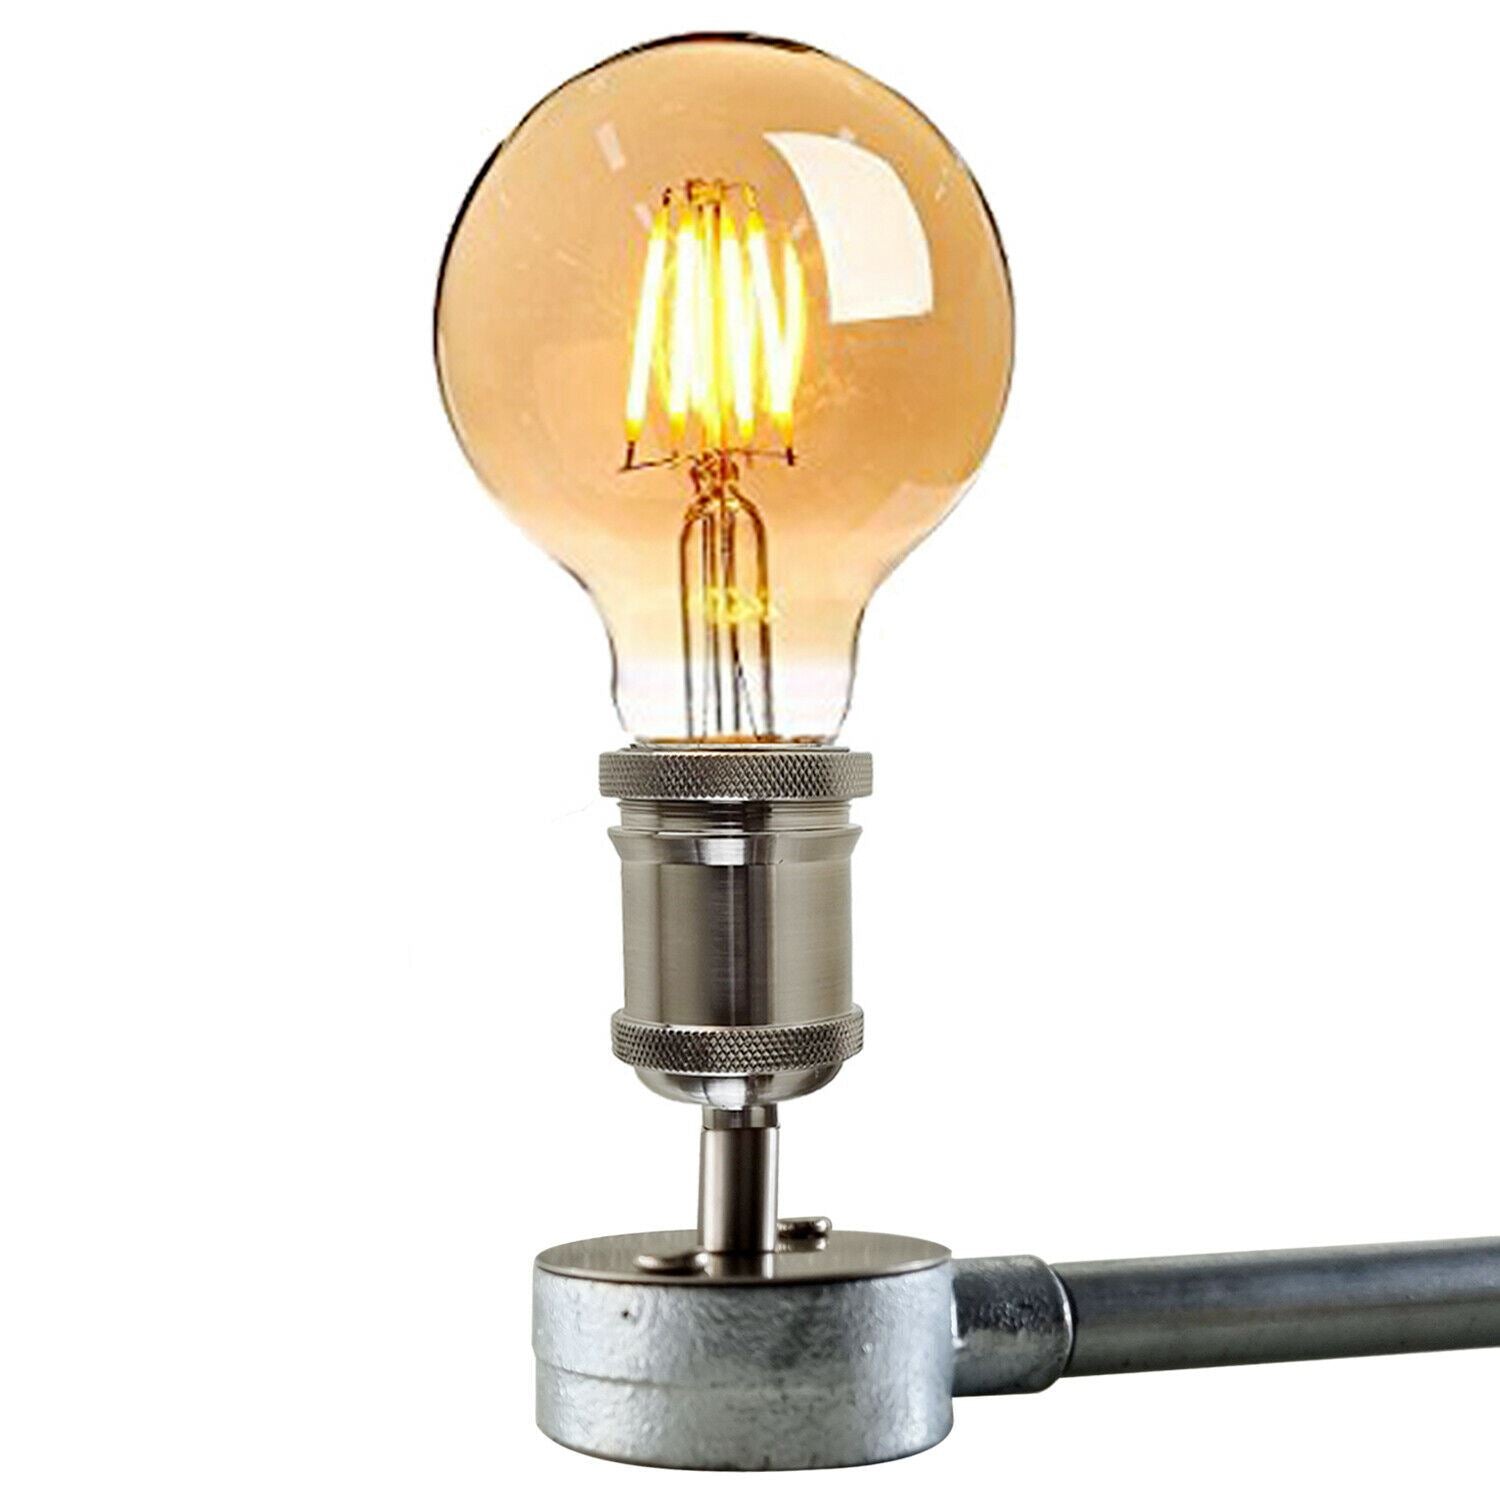 Vintage Industrial Pendant Light Galvanized Pipe Ceiling Light Fitting Metal Lamp Fixture For Hotel, Restaurants, Bar, Dining Room, Garage~1239 - LEDSone UK Ltd